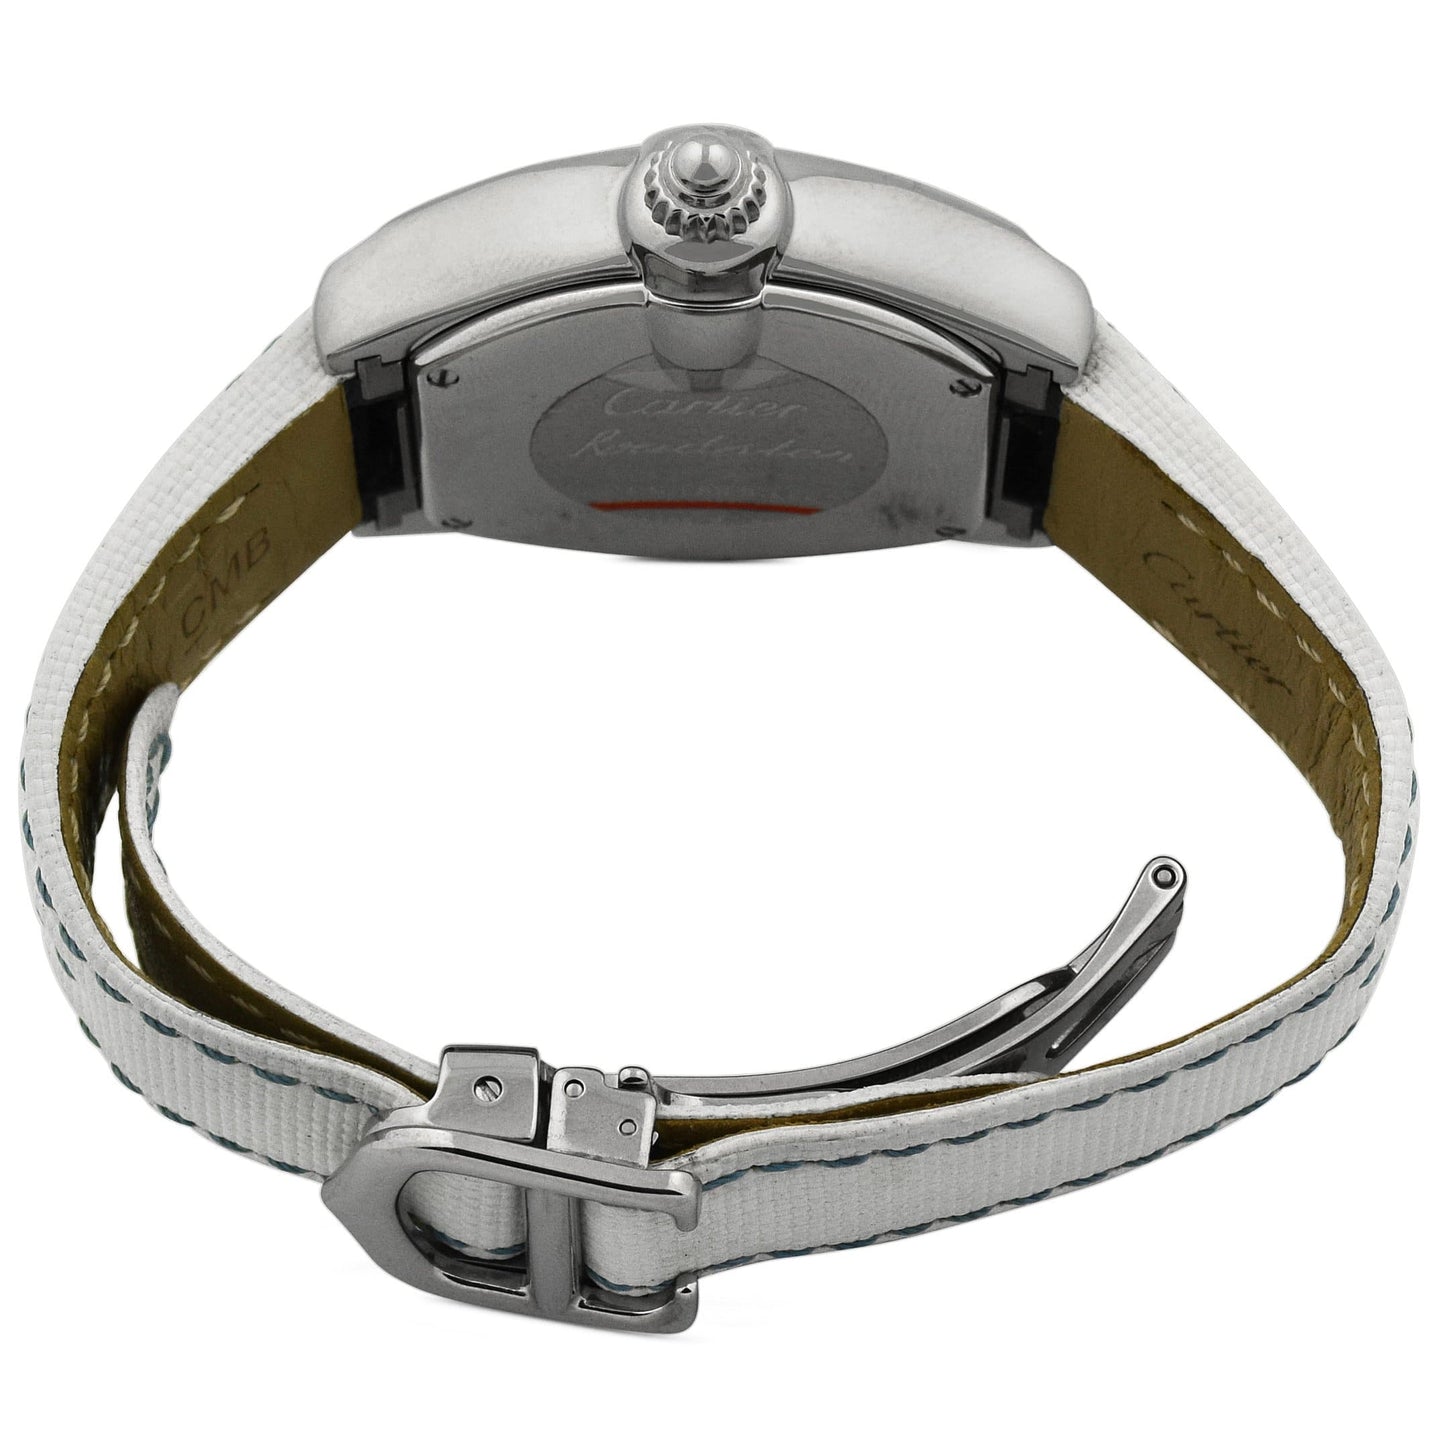 Cartier Ladys Roadster Stainless Steel 31mm Blue Roman Dial Watch Reference #: W62053V3 - Happy Jewelers Fine Jewelry Lifetime Warranty